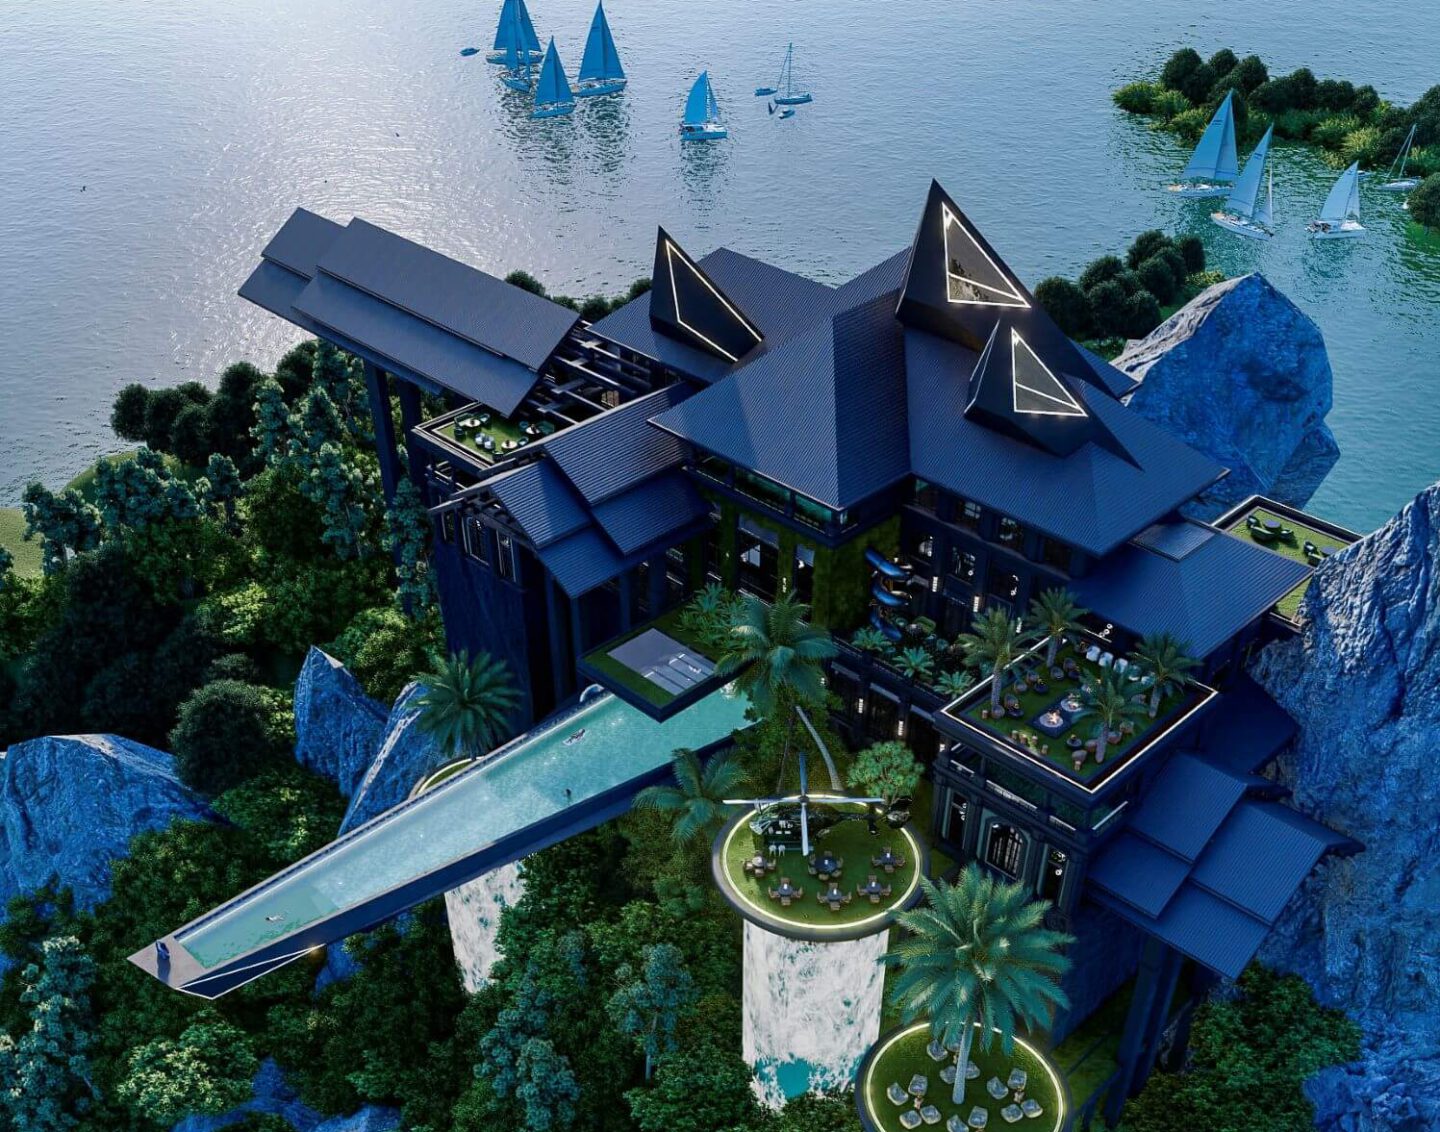 veliz arquitecto, mansion of the waters, metaverse design